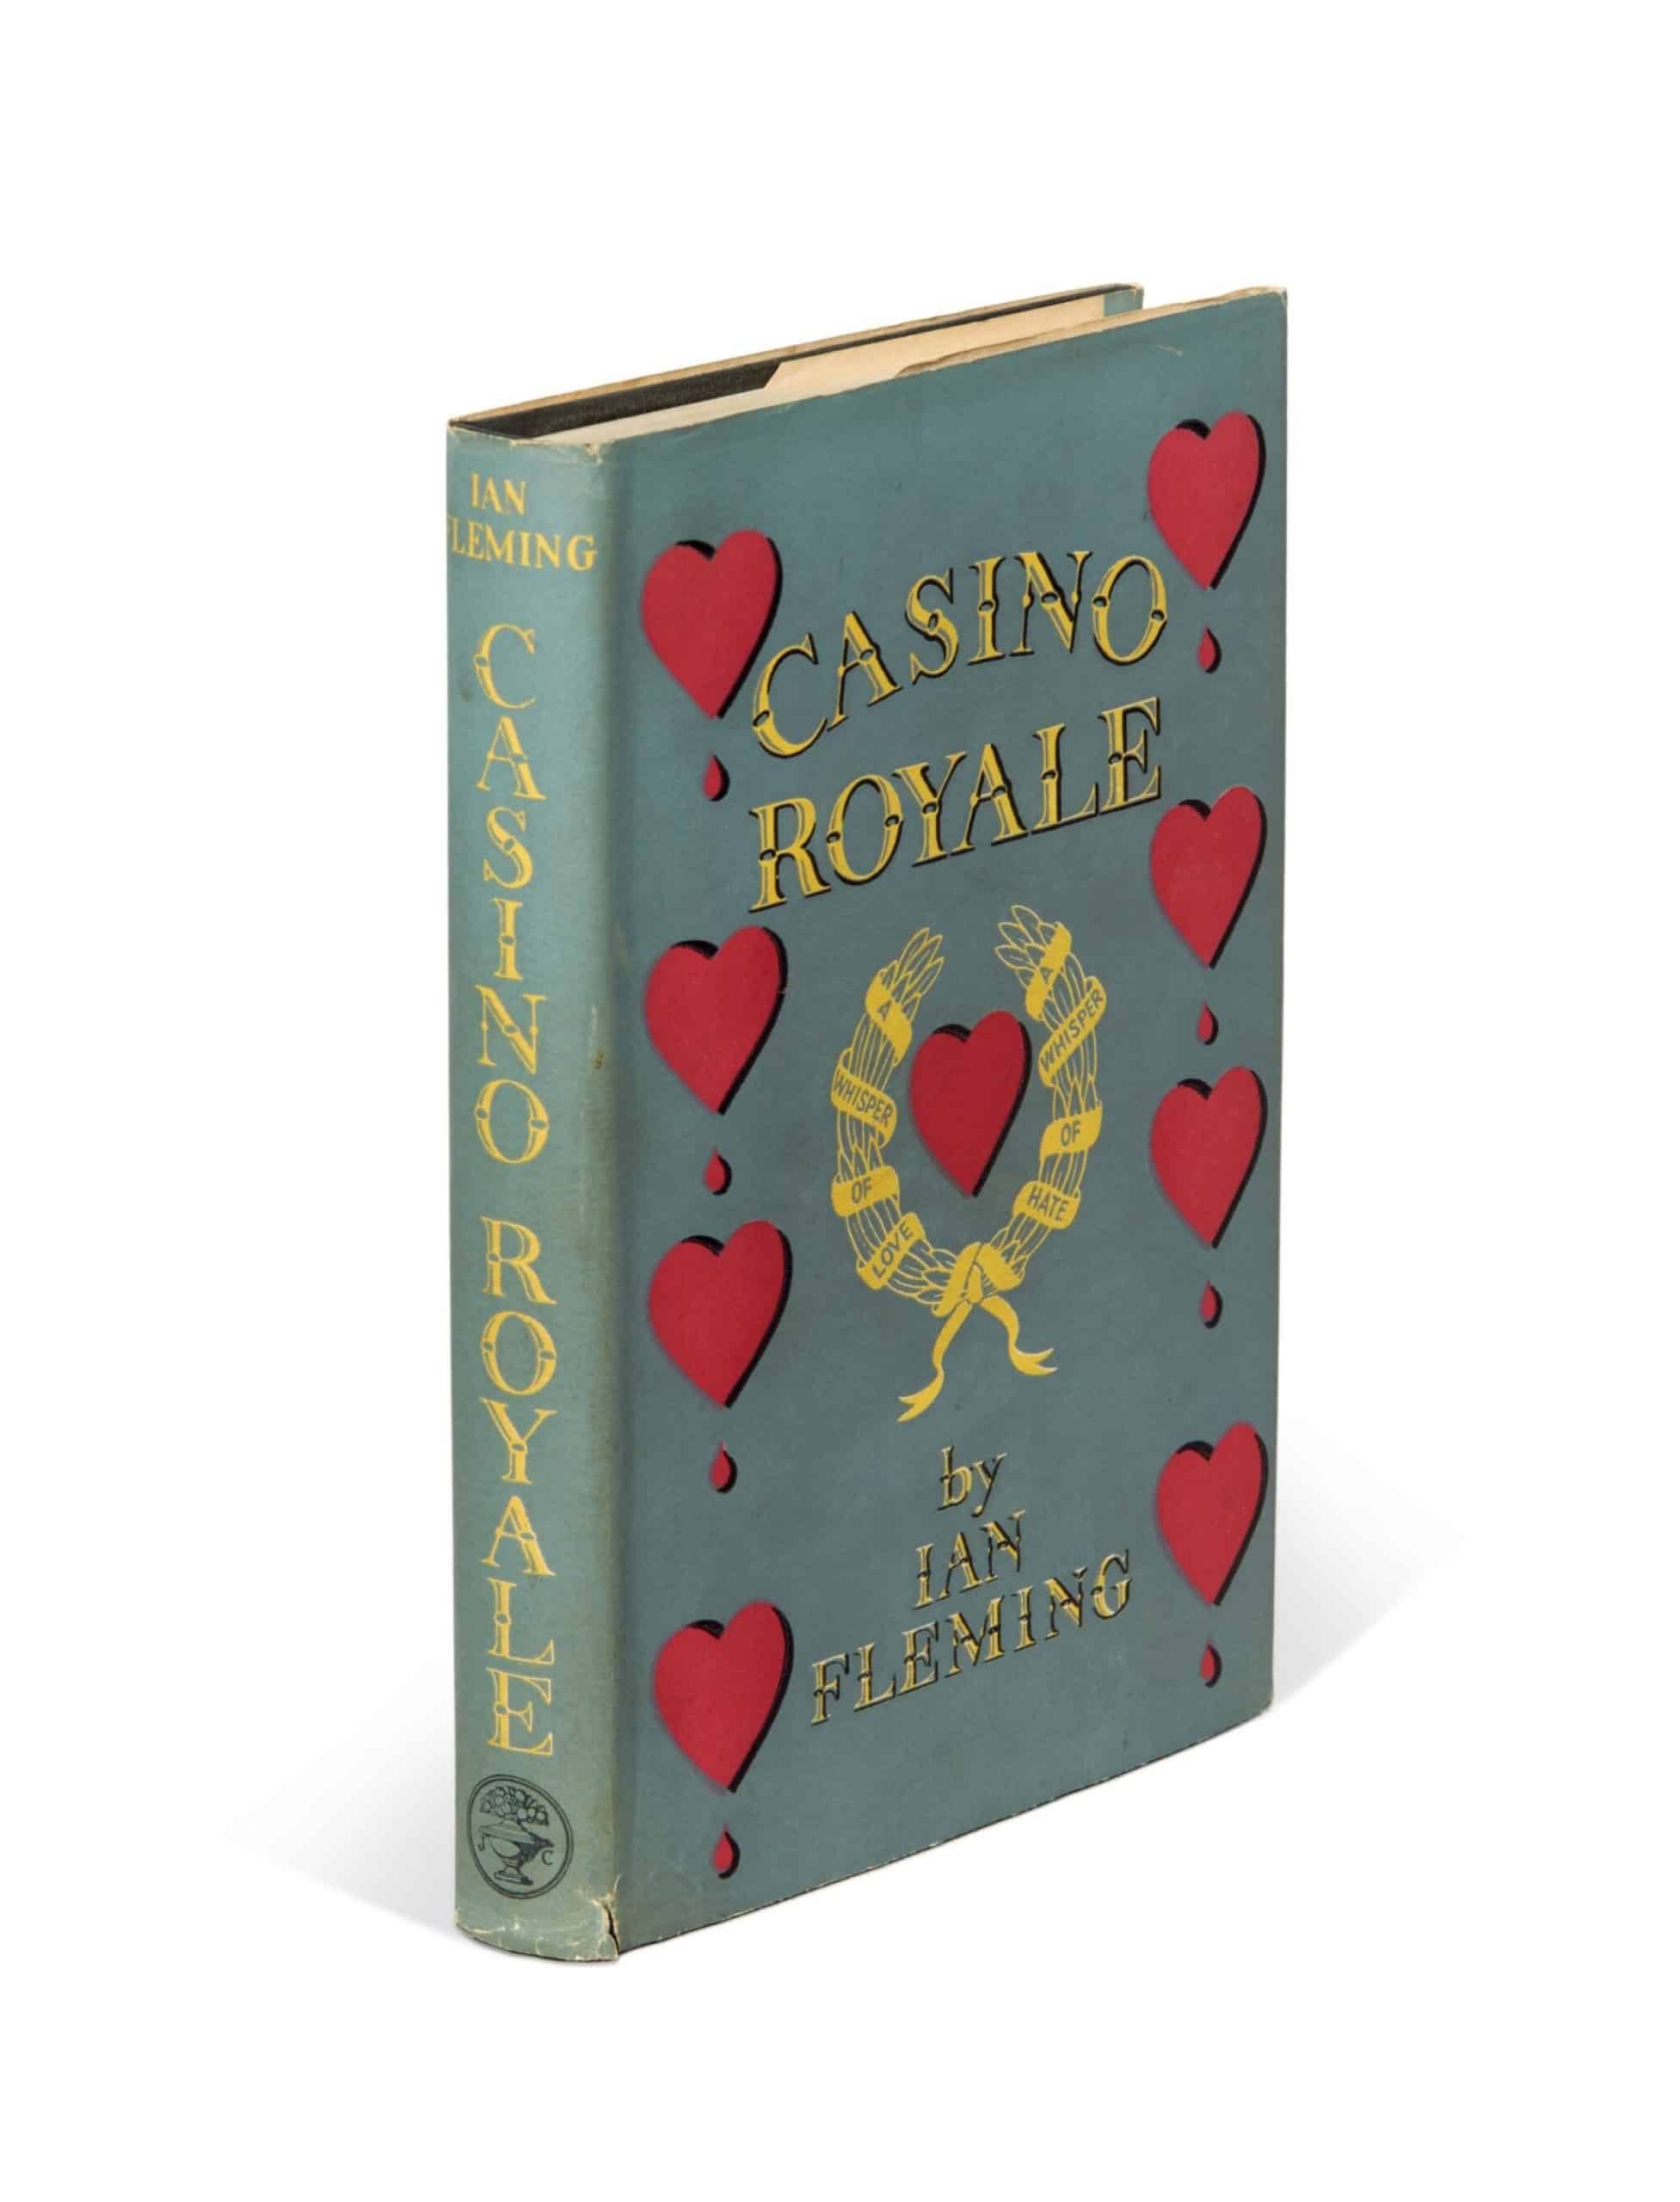 “Casino Royale” by Ian Fleming